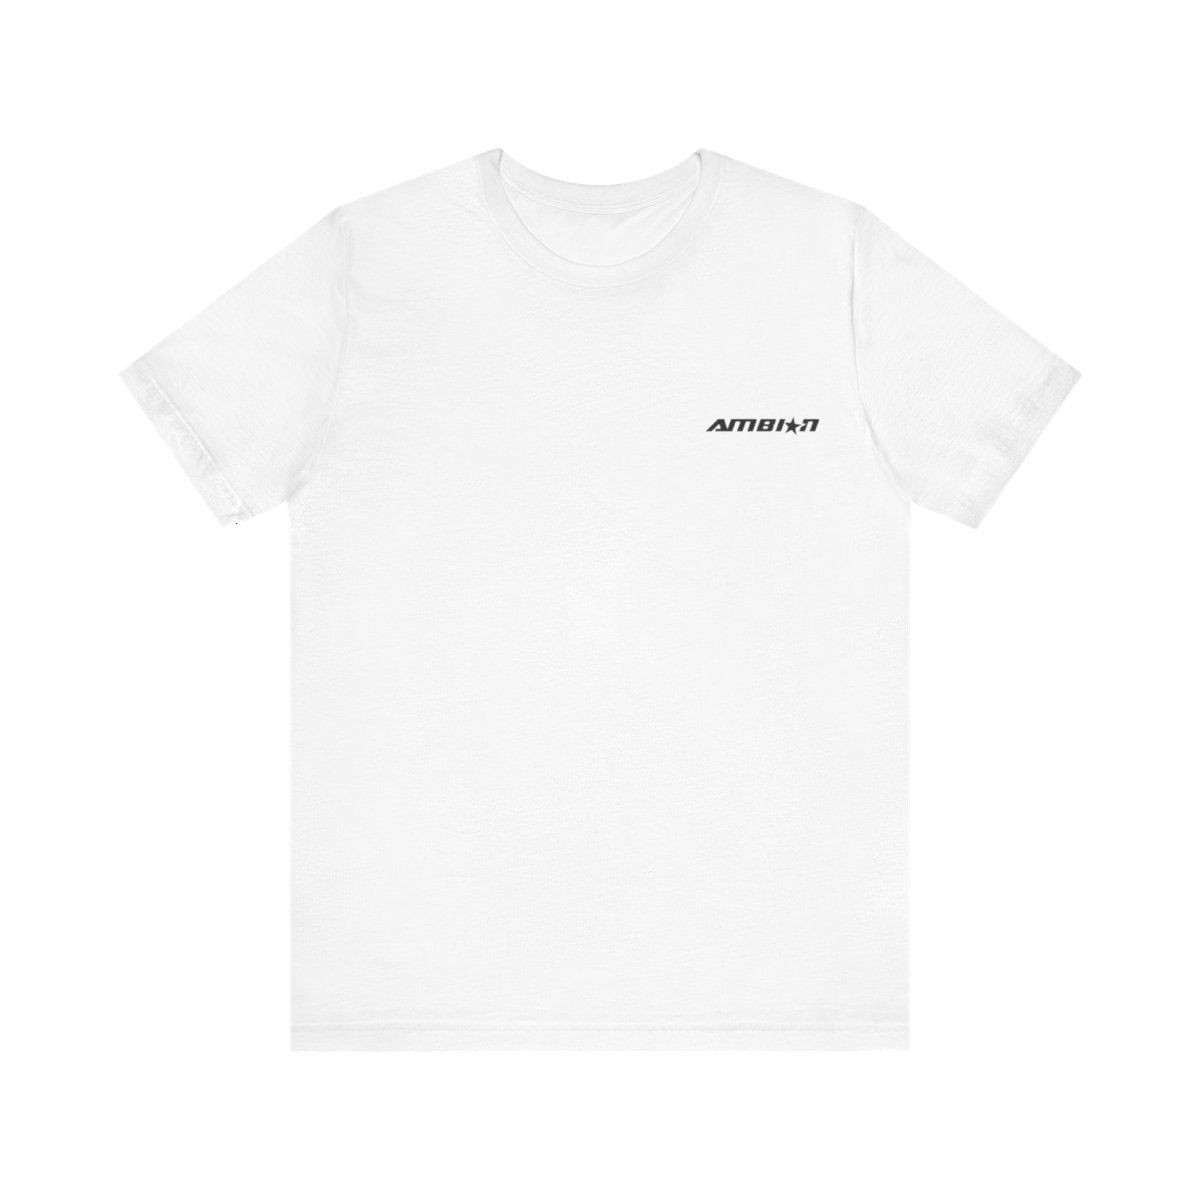 Classic yet affordable White Shirt. Affordable Timeless Black Shirt. Plain white shirt with logo